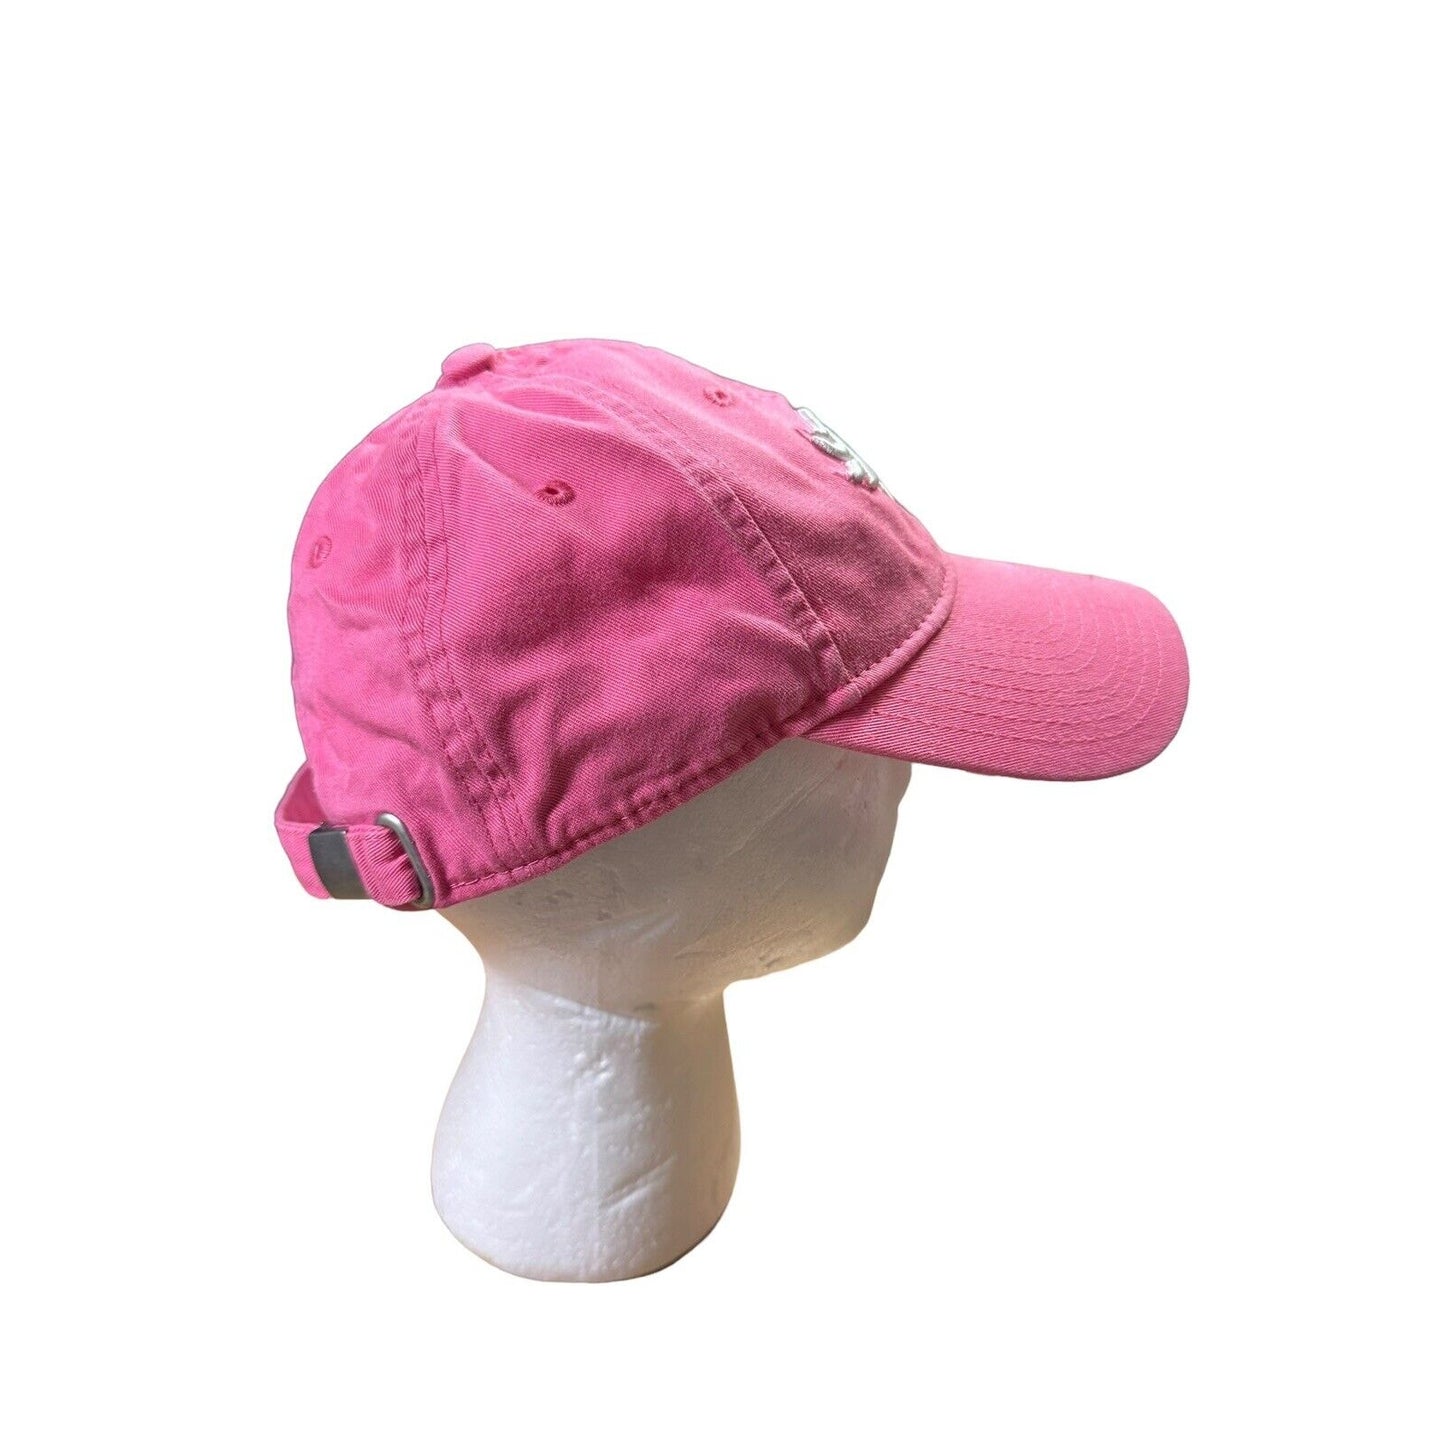 NFL New Era 9Twenty Denver Broncos Pink Adjustable Hat Cat Woman’s